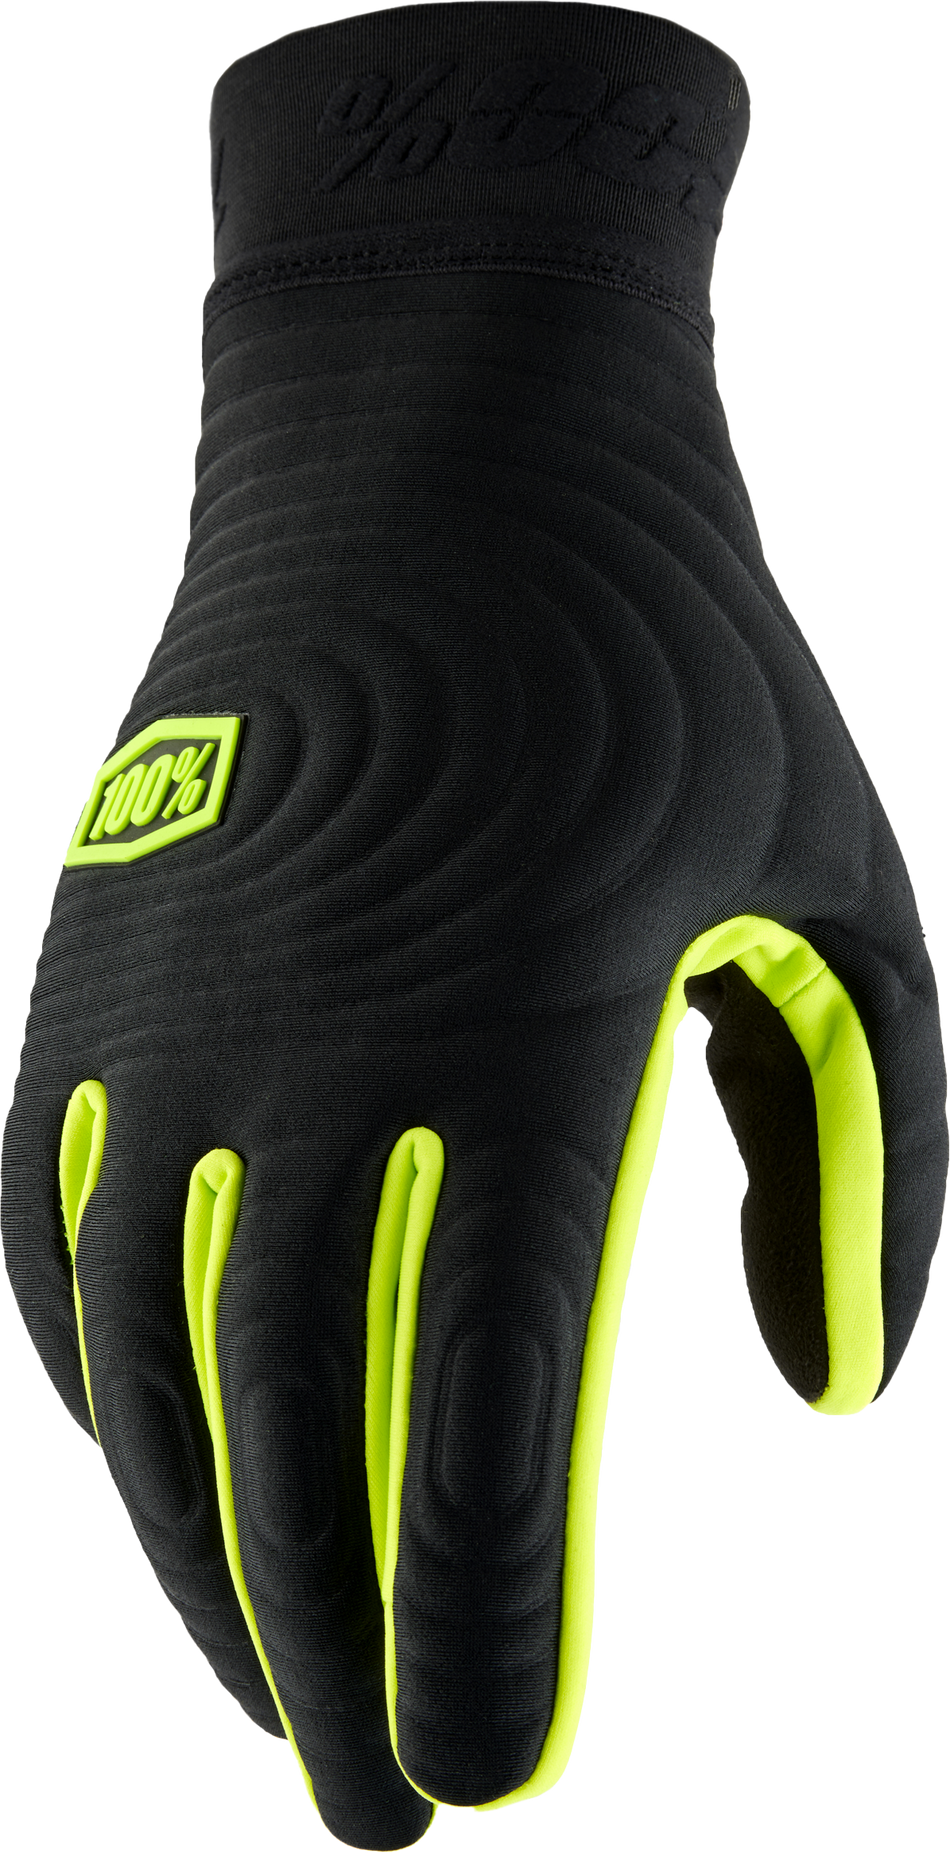 100% Brisker Xtreme Gloves Black/Fluo Yellow Xl 10030-00004